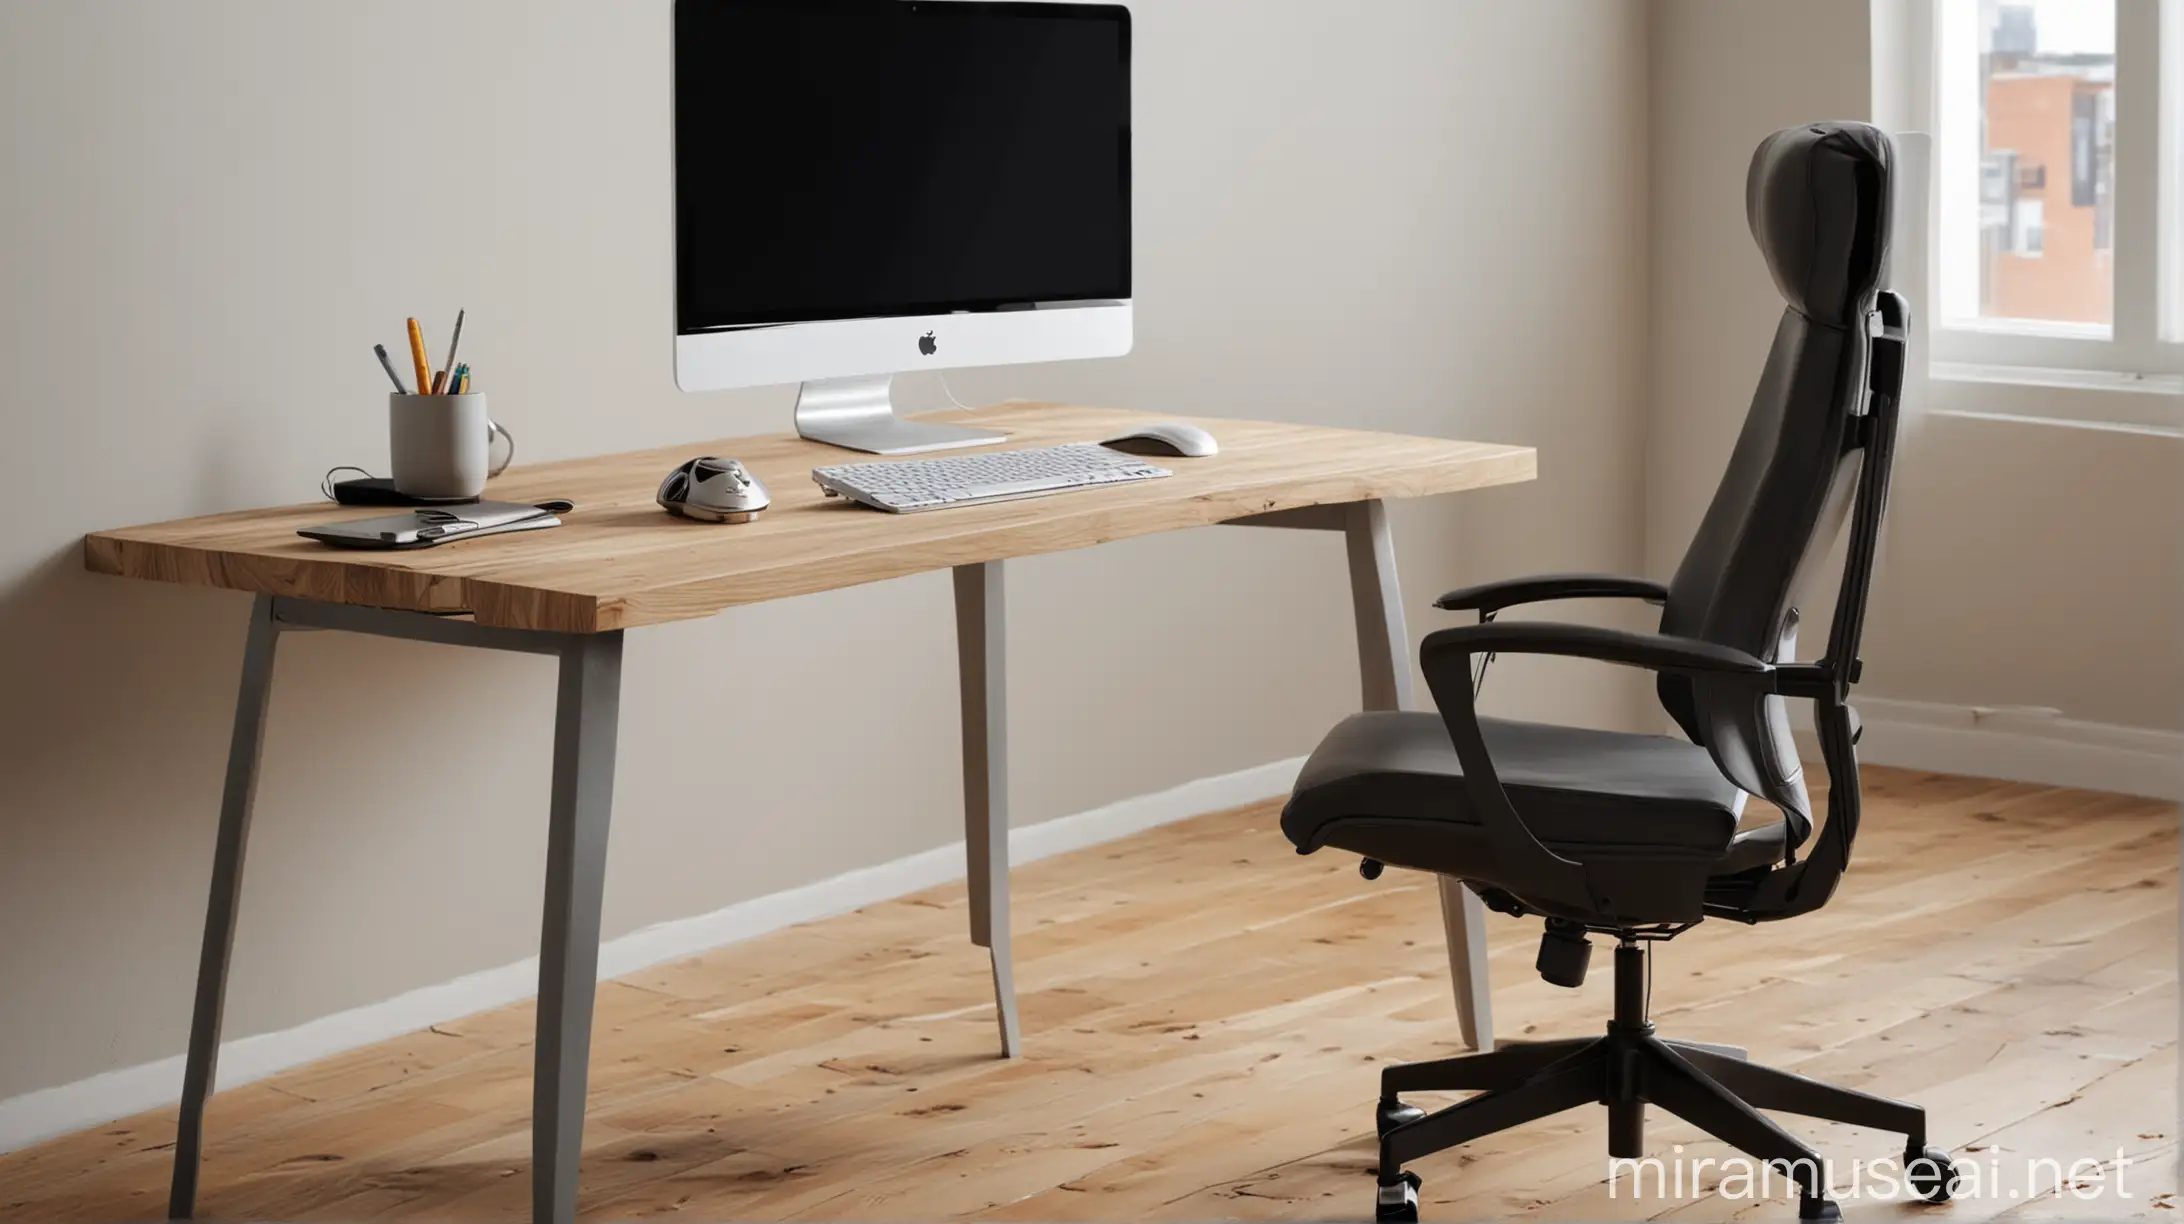 Sleek laptop on a modern wooden office desk with a modern office chair in a well-lit room